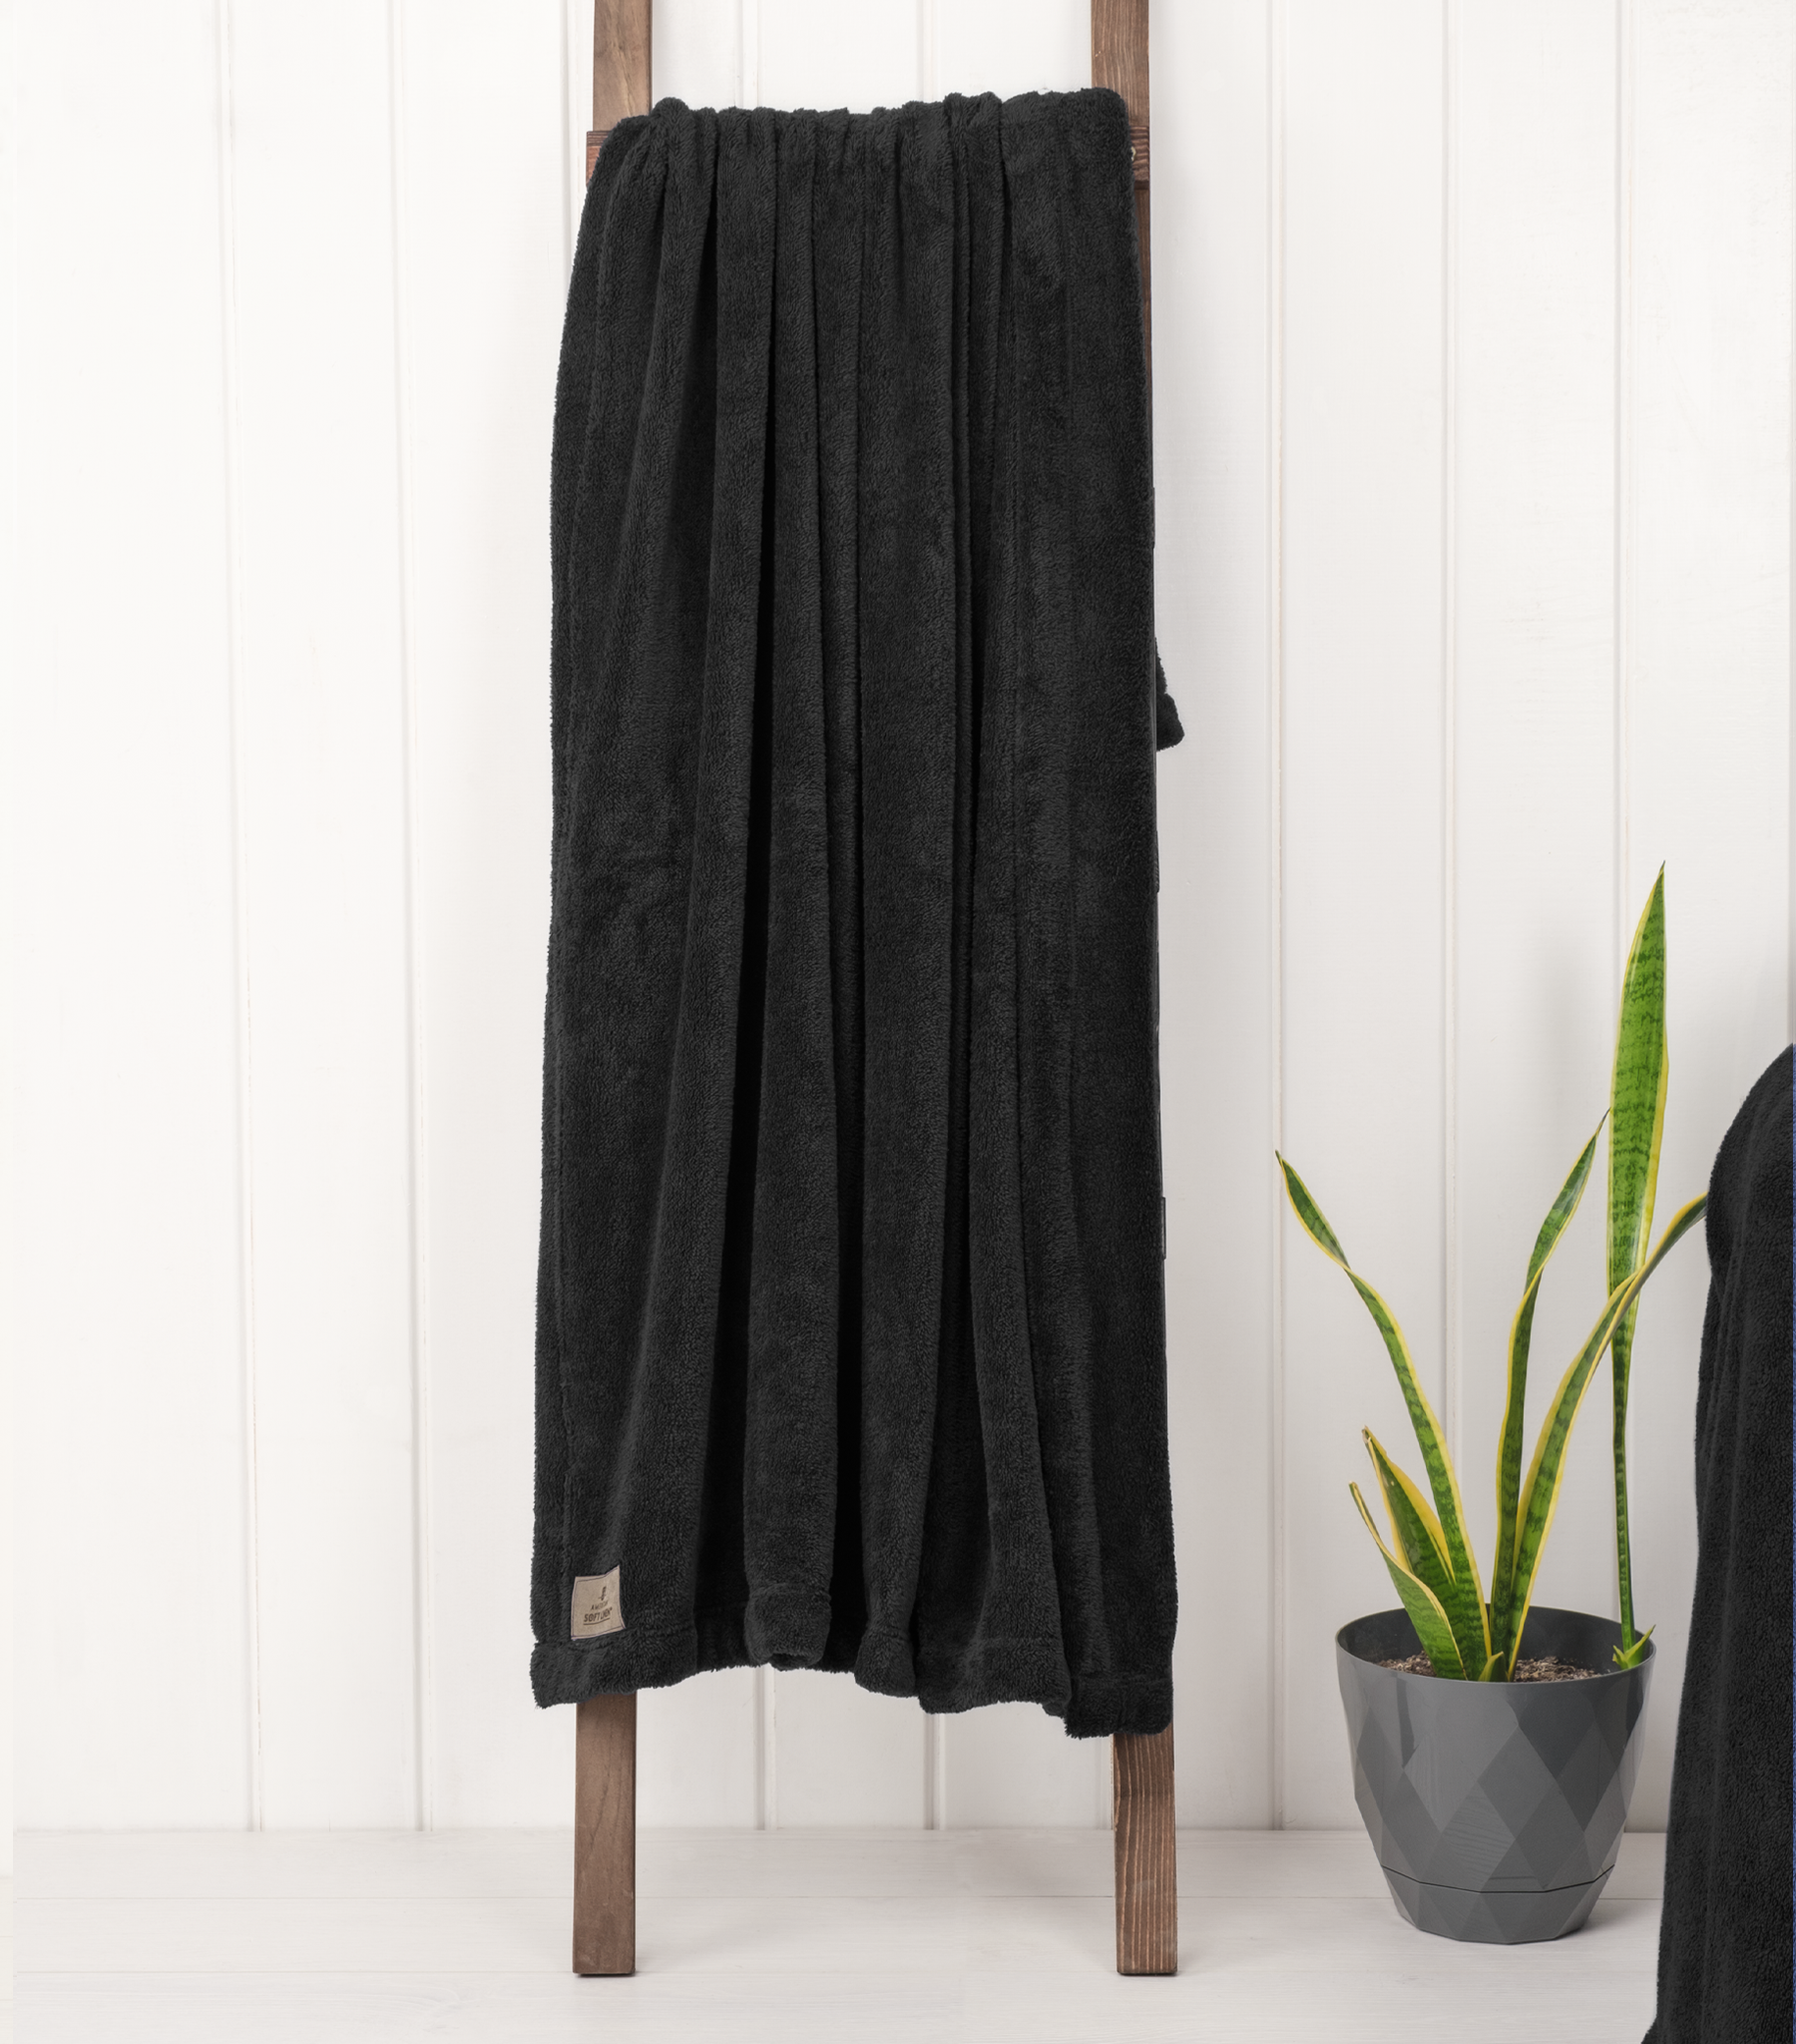 American Soft Linen - Bedding Fleece Blanket - Throw Size 50x60 inches - Black - 2